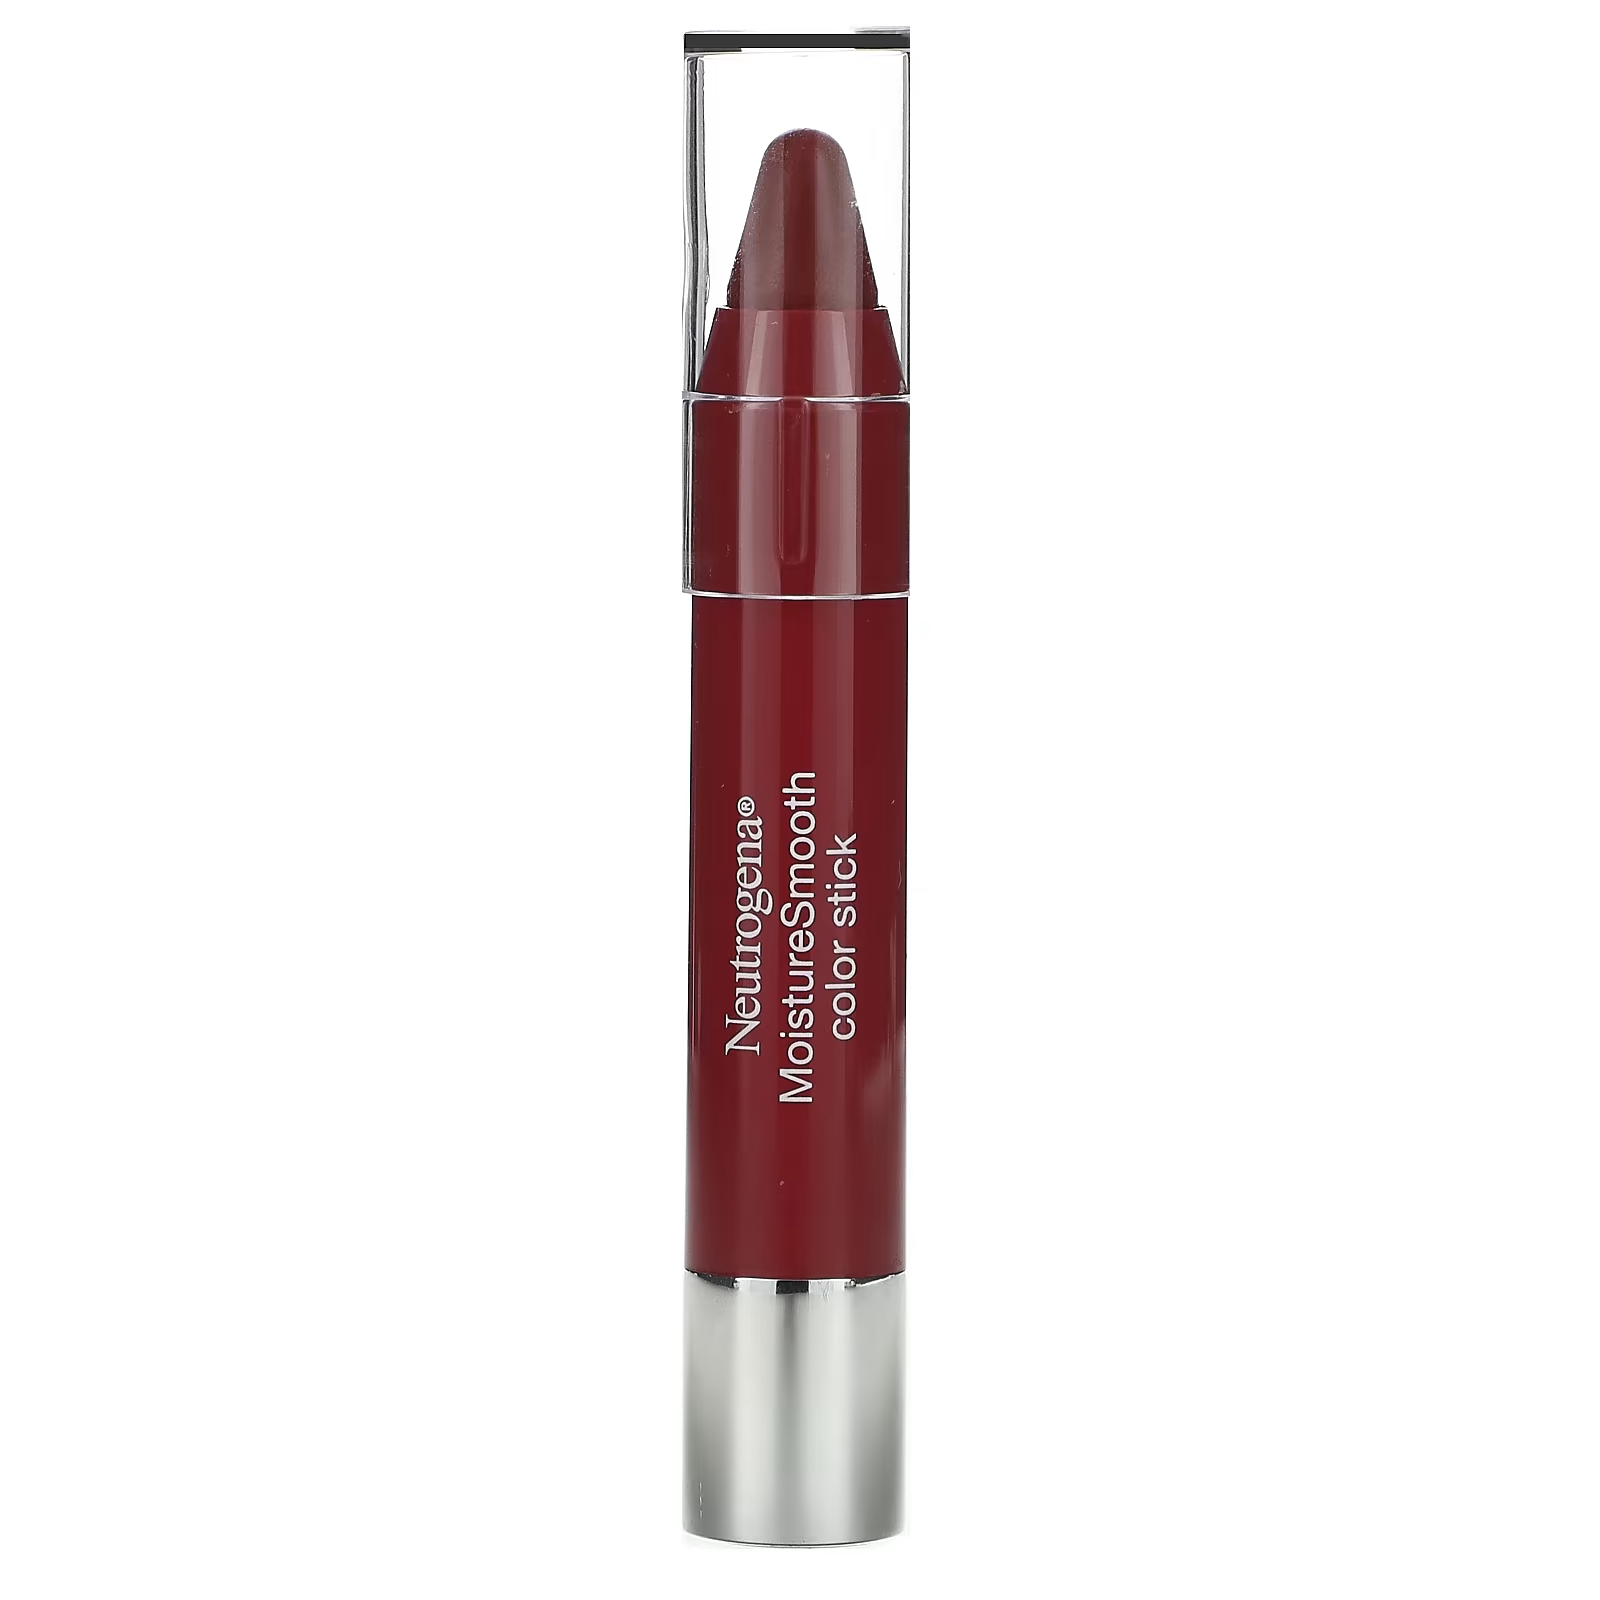 Neutrogena MoistureSmooth Color Stick Classic Red 160 3,1 г (0,11 жидк. унции) neutrogena moisturesmooth краситель классический красный 160 3 1 г 0 11 жидк унции